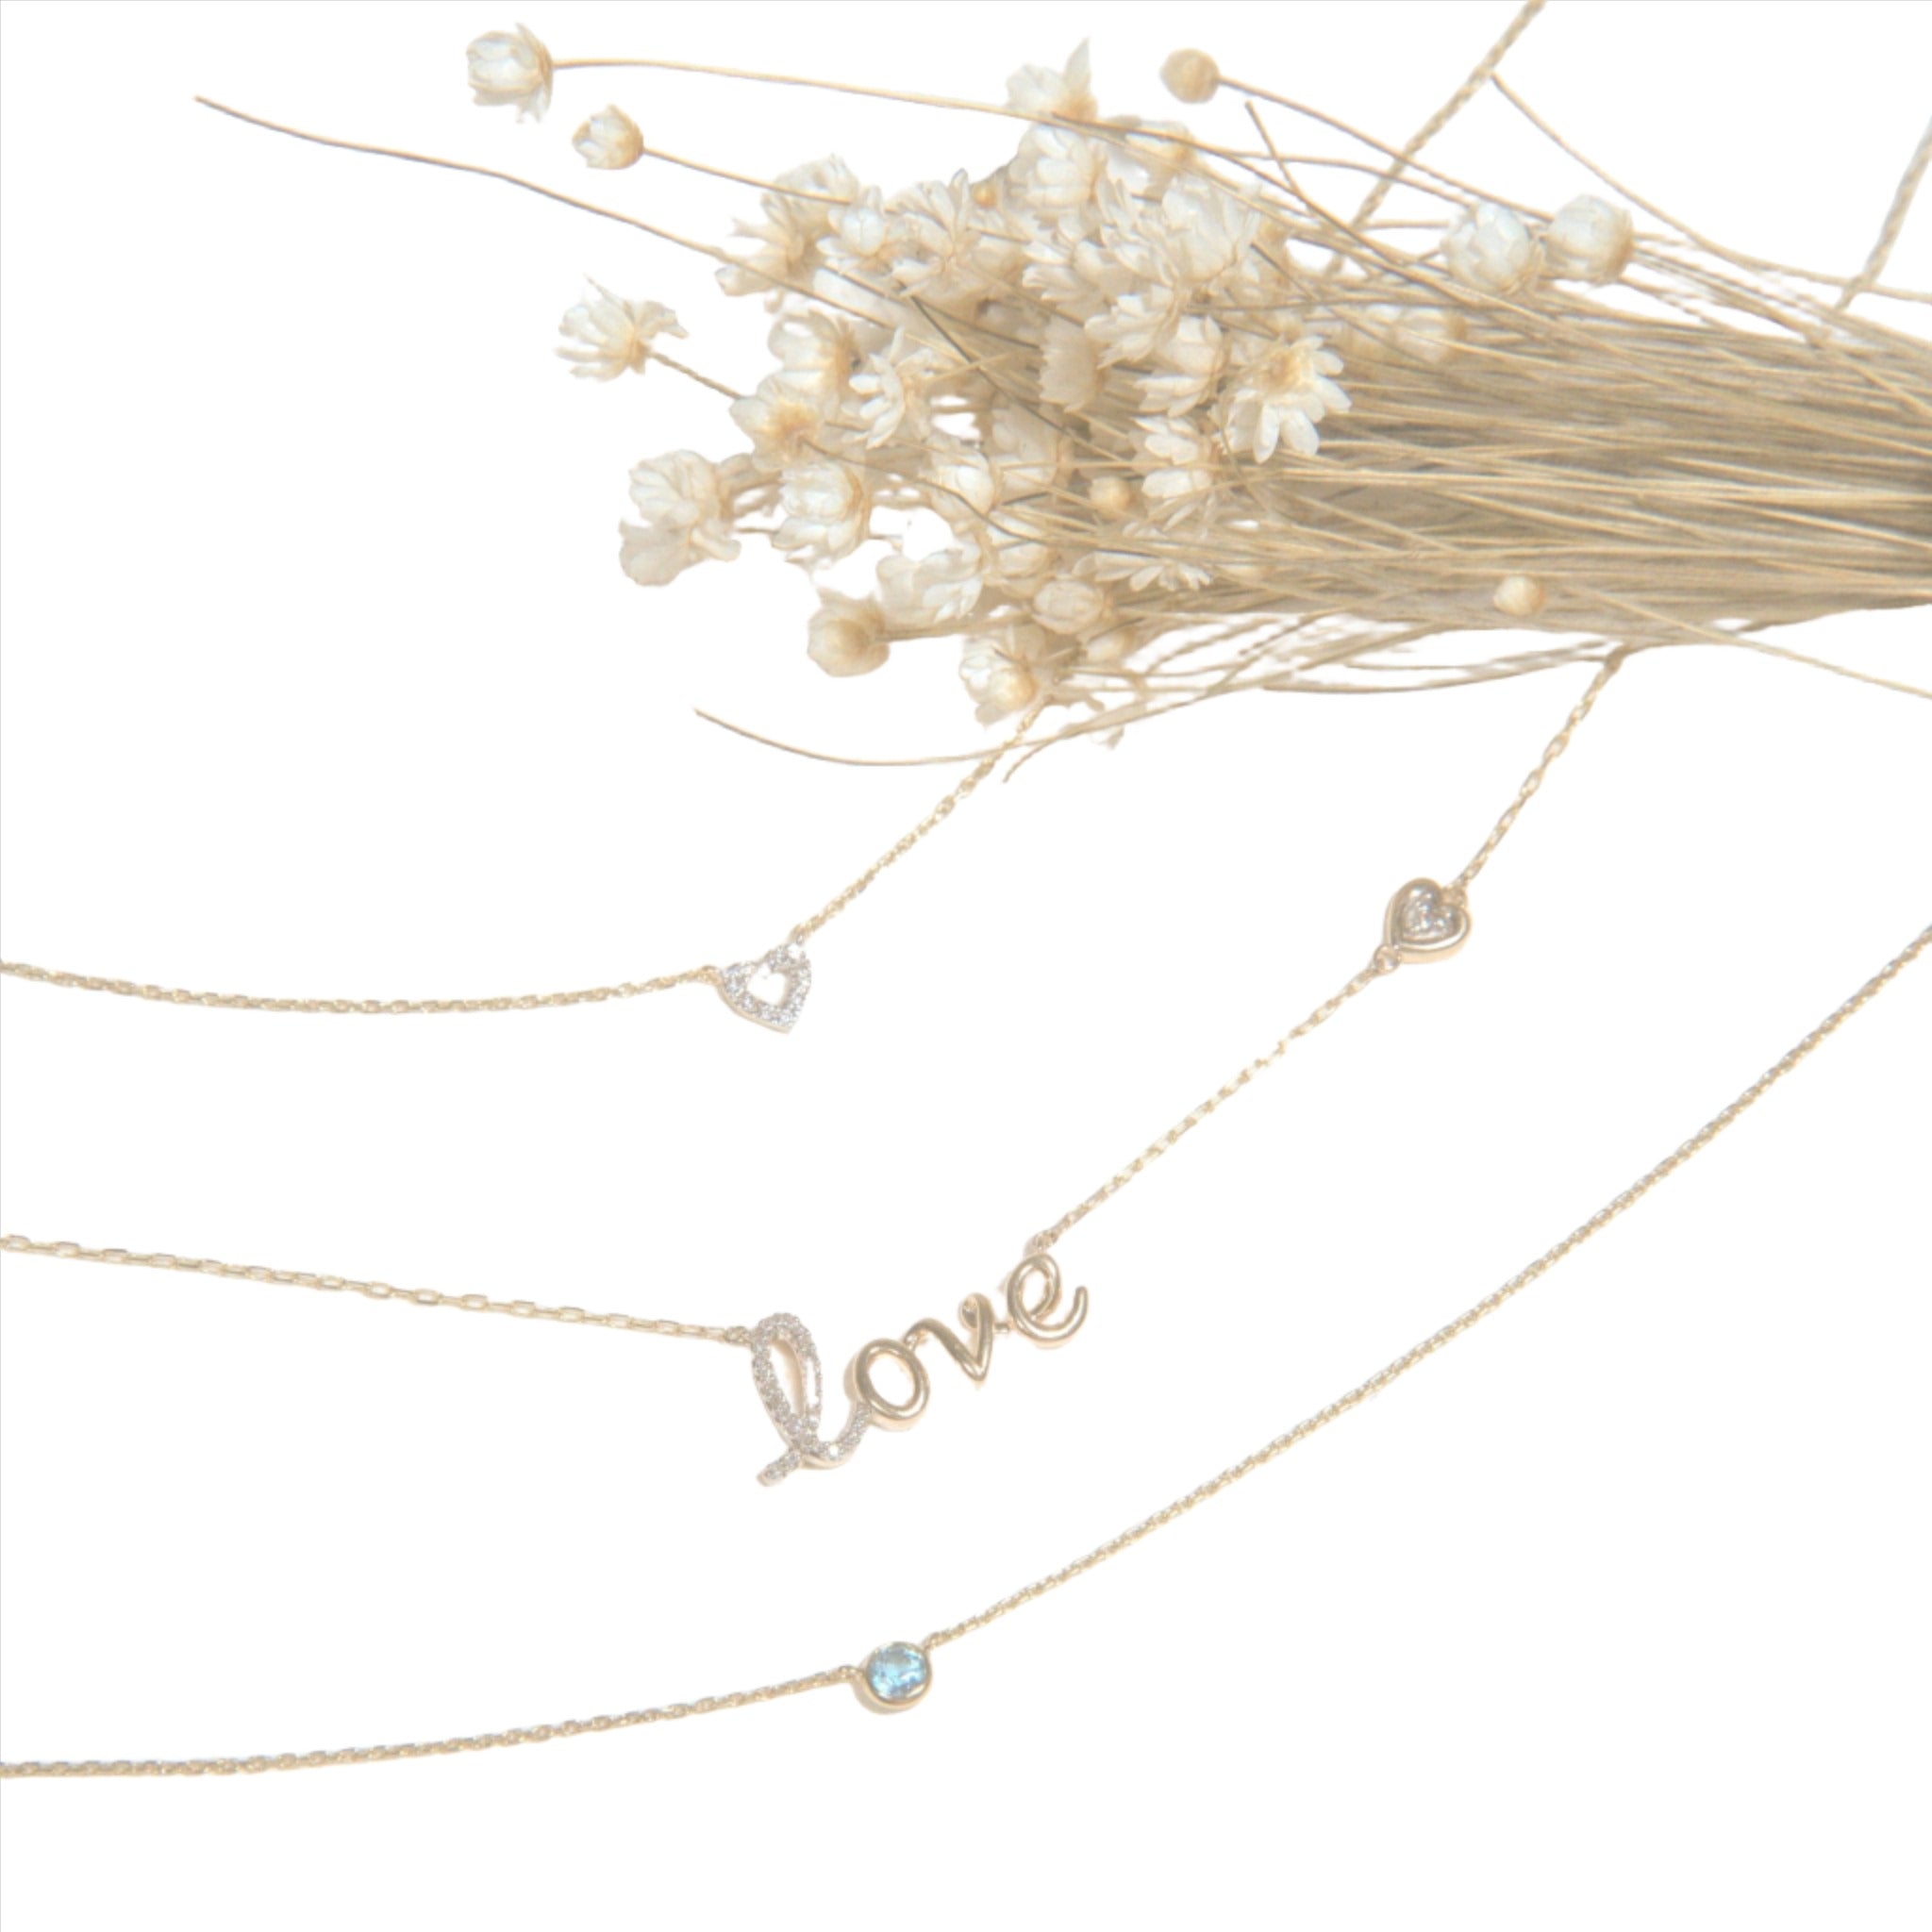 Diamond Love Necklace in Solid 14k Gold Necklaces Estella Collection #product_description# #tag4# #tag5# #tag6# #tag7# #tag8# #tag9# #tag10#